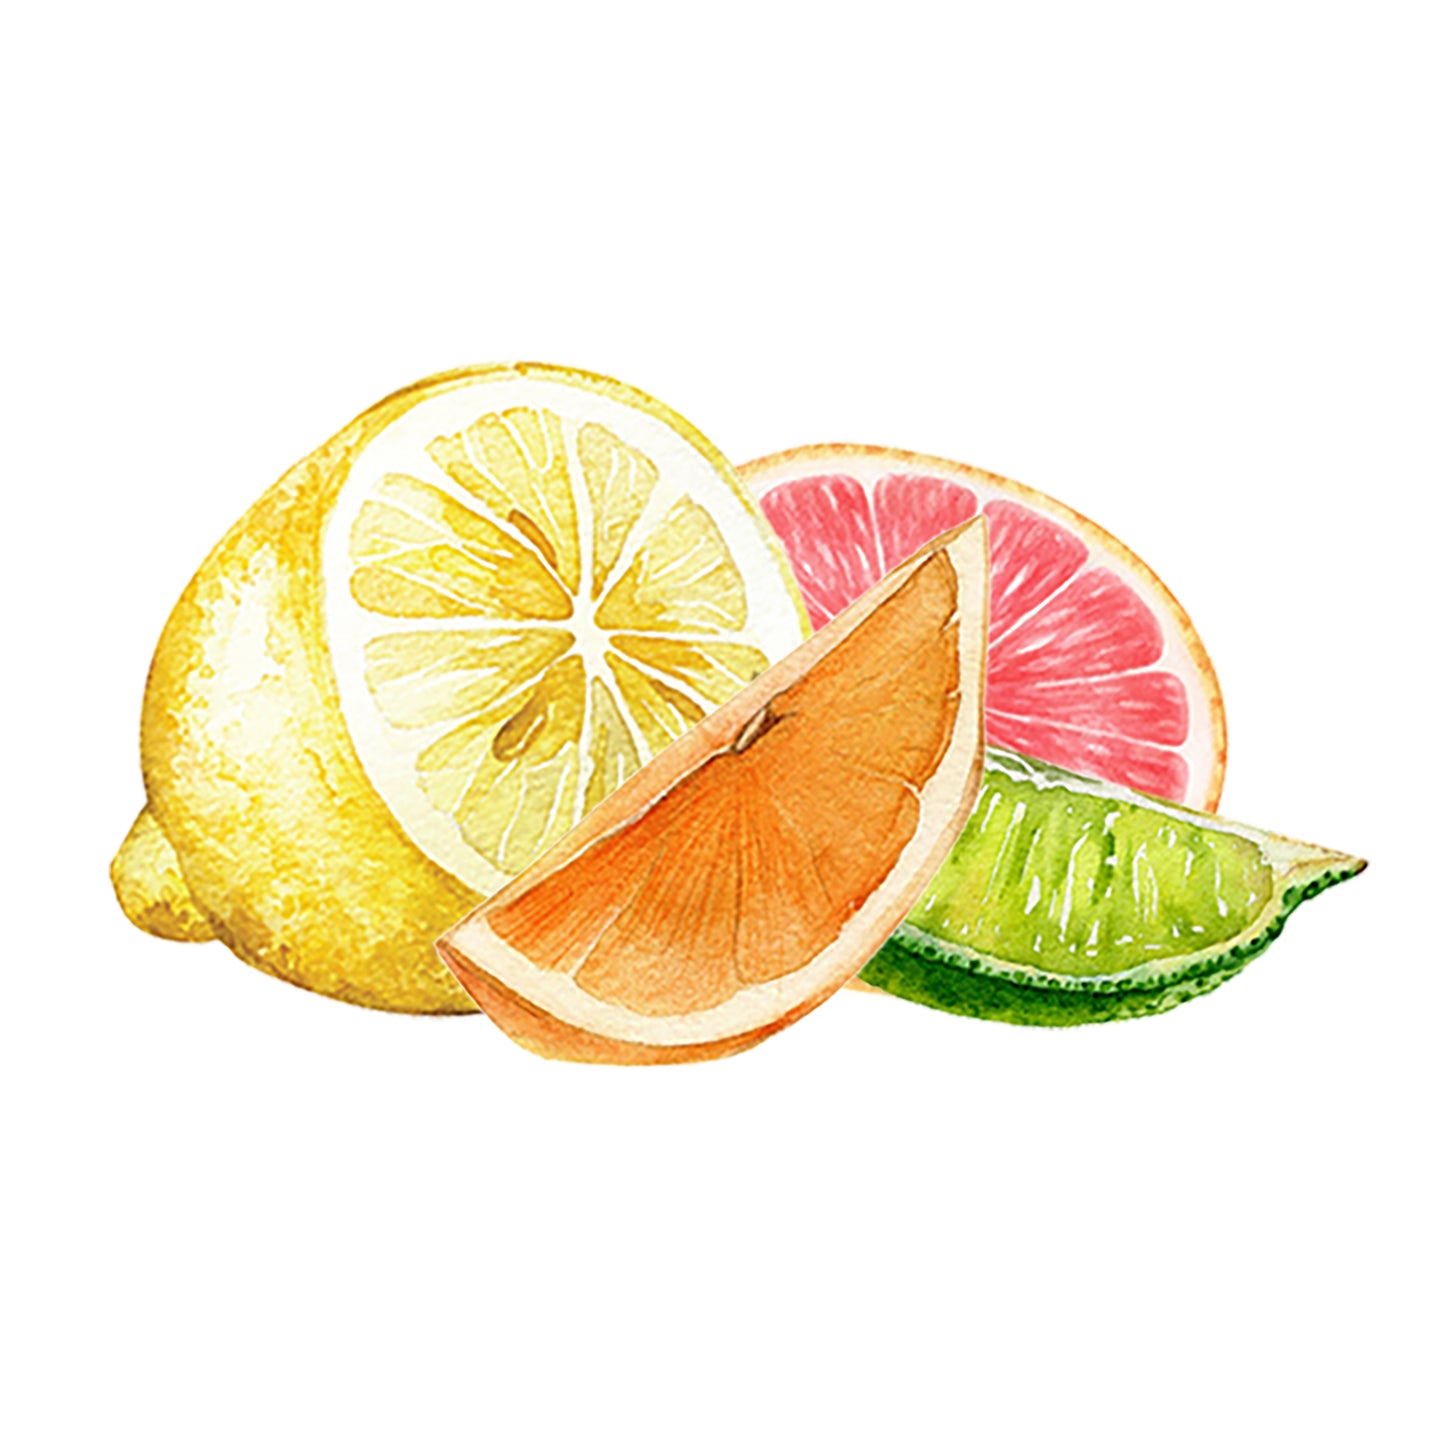 Lemon, Orange, Grapefruit & Lime Essential Oil Blend